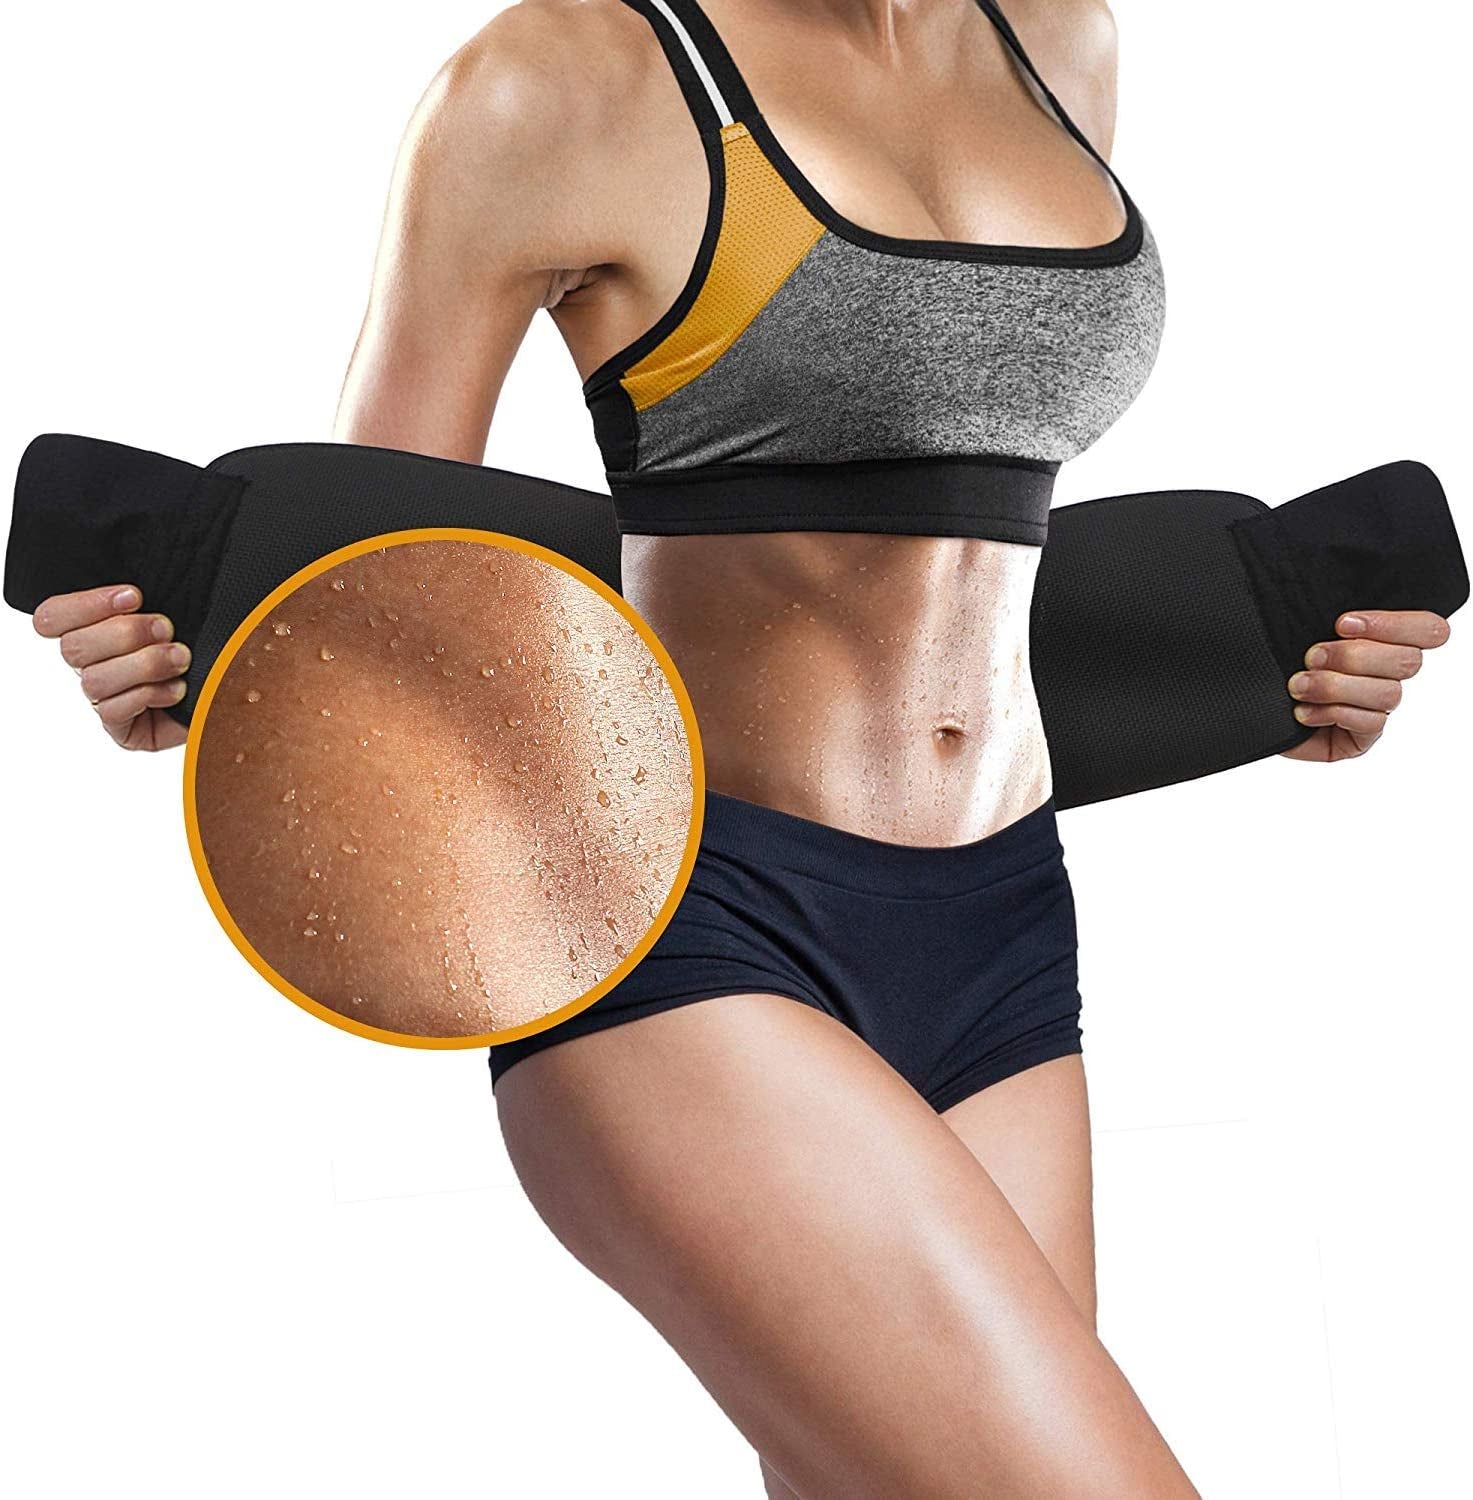 Waist Trainer for Women Lower Belly - Waist Trimmer Belt Sauna Tummy Toner Low Back and Lumbar Support with Sauna Suit Effect (Medium Black)